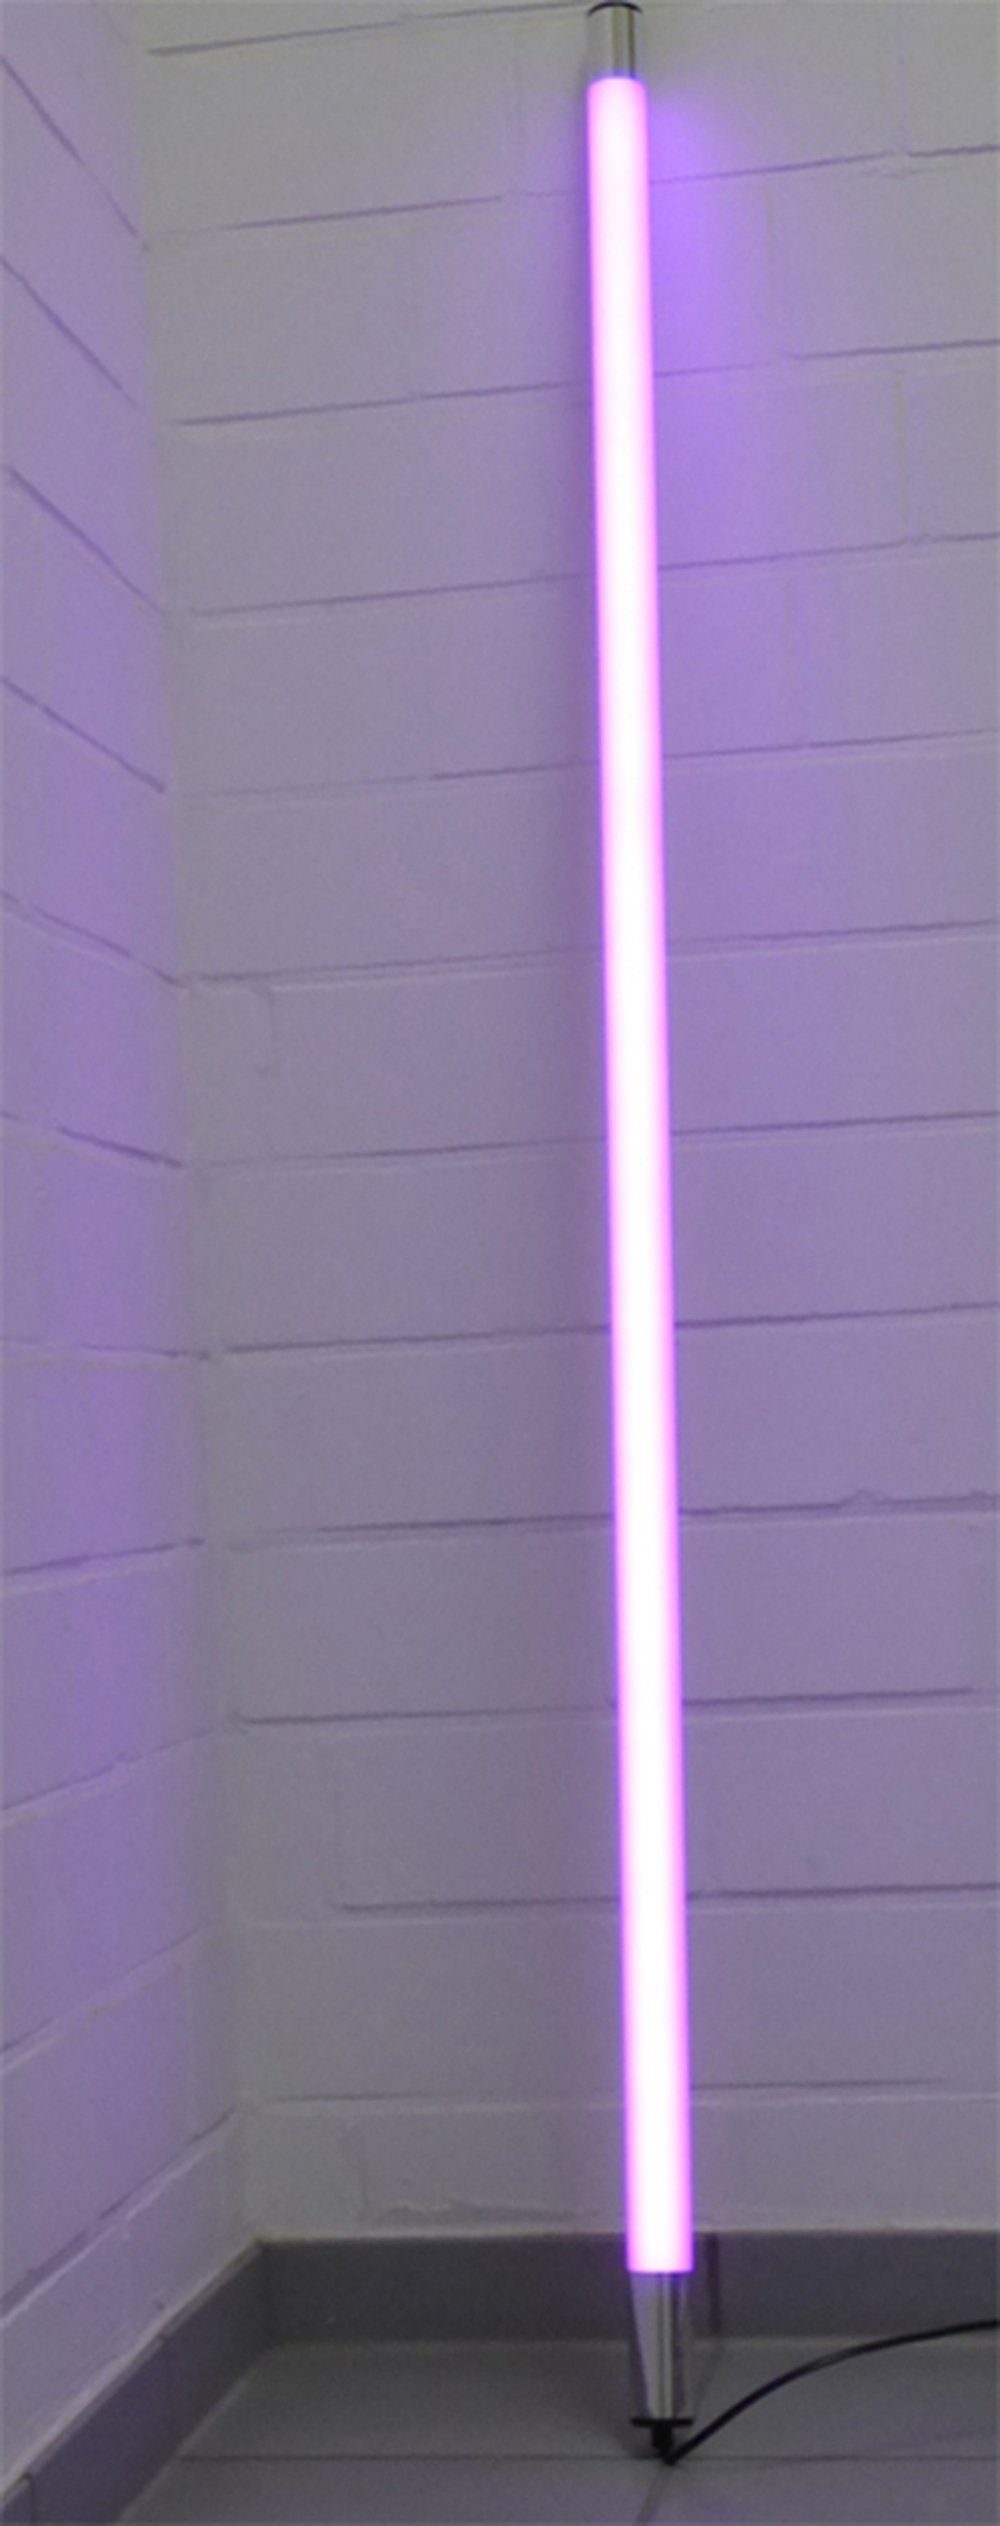 XENON Lm IP20 Innen Wandleuchte Satiniert LED, Violett, 1,23m LED 6472 Länge Xenon Leuchtstab 1700 LED